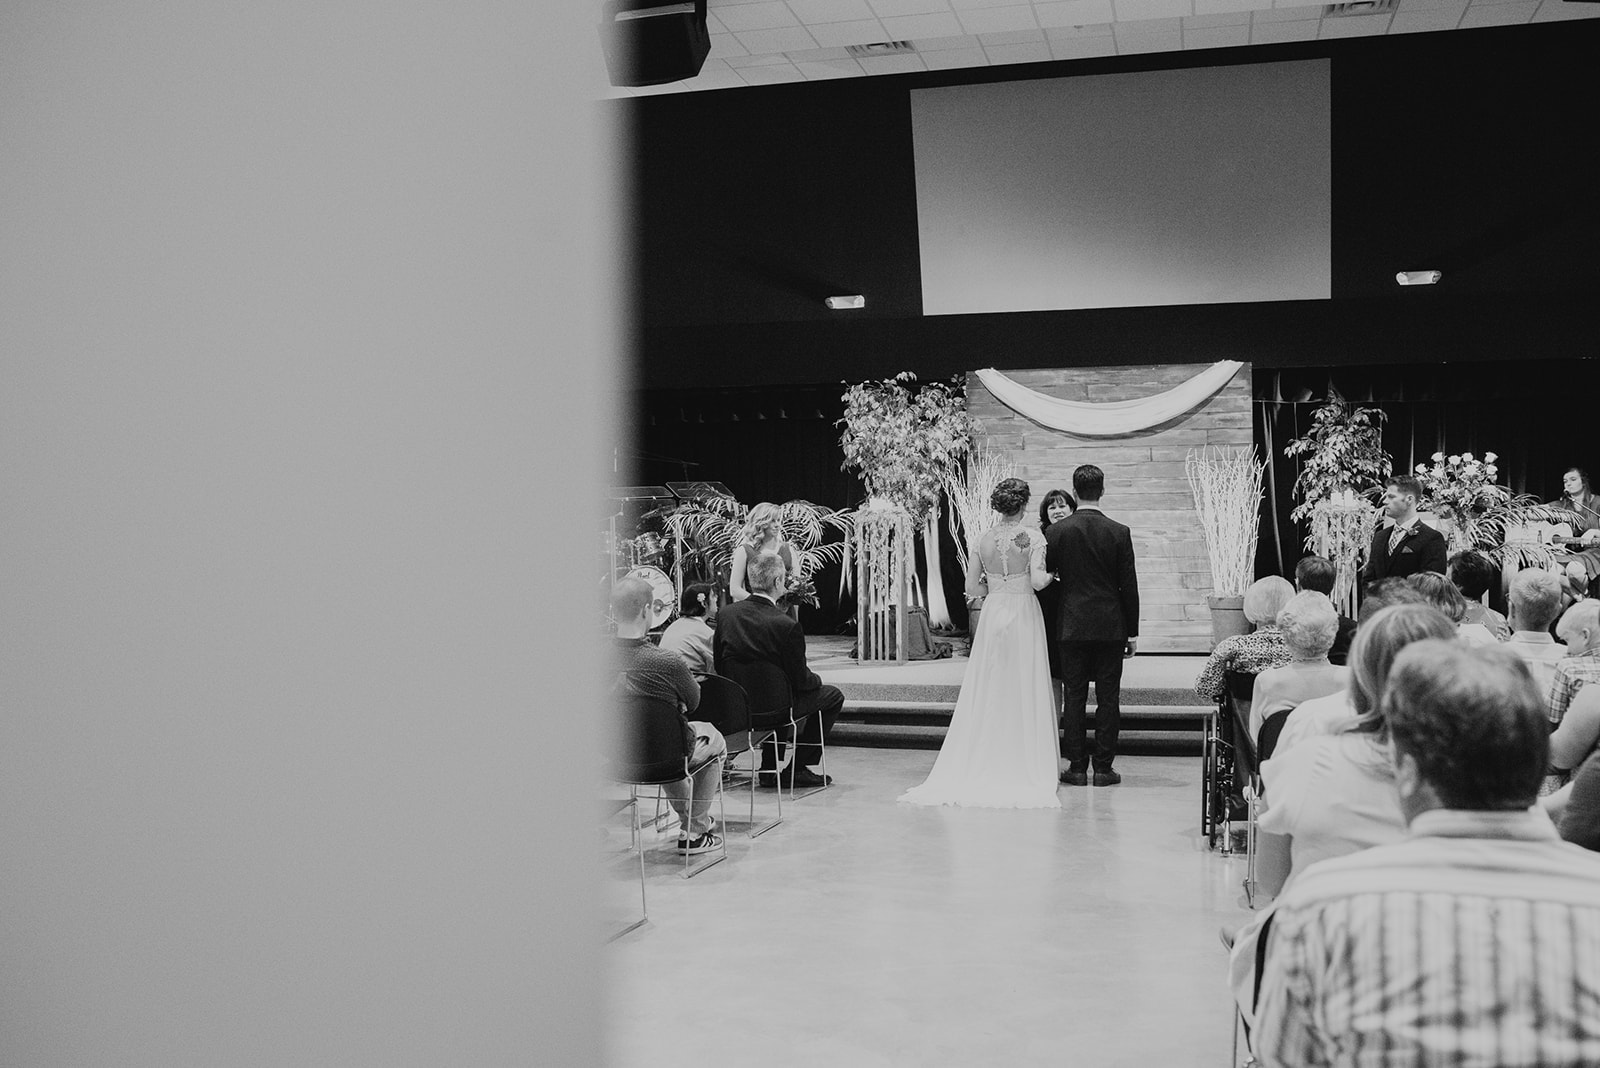 City Life Church in Grand rapids Michigan Wedding Ceremony